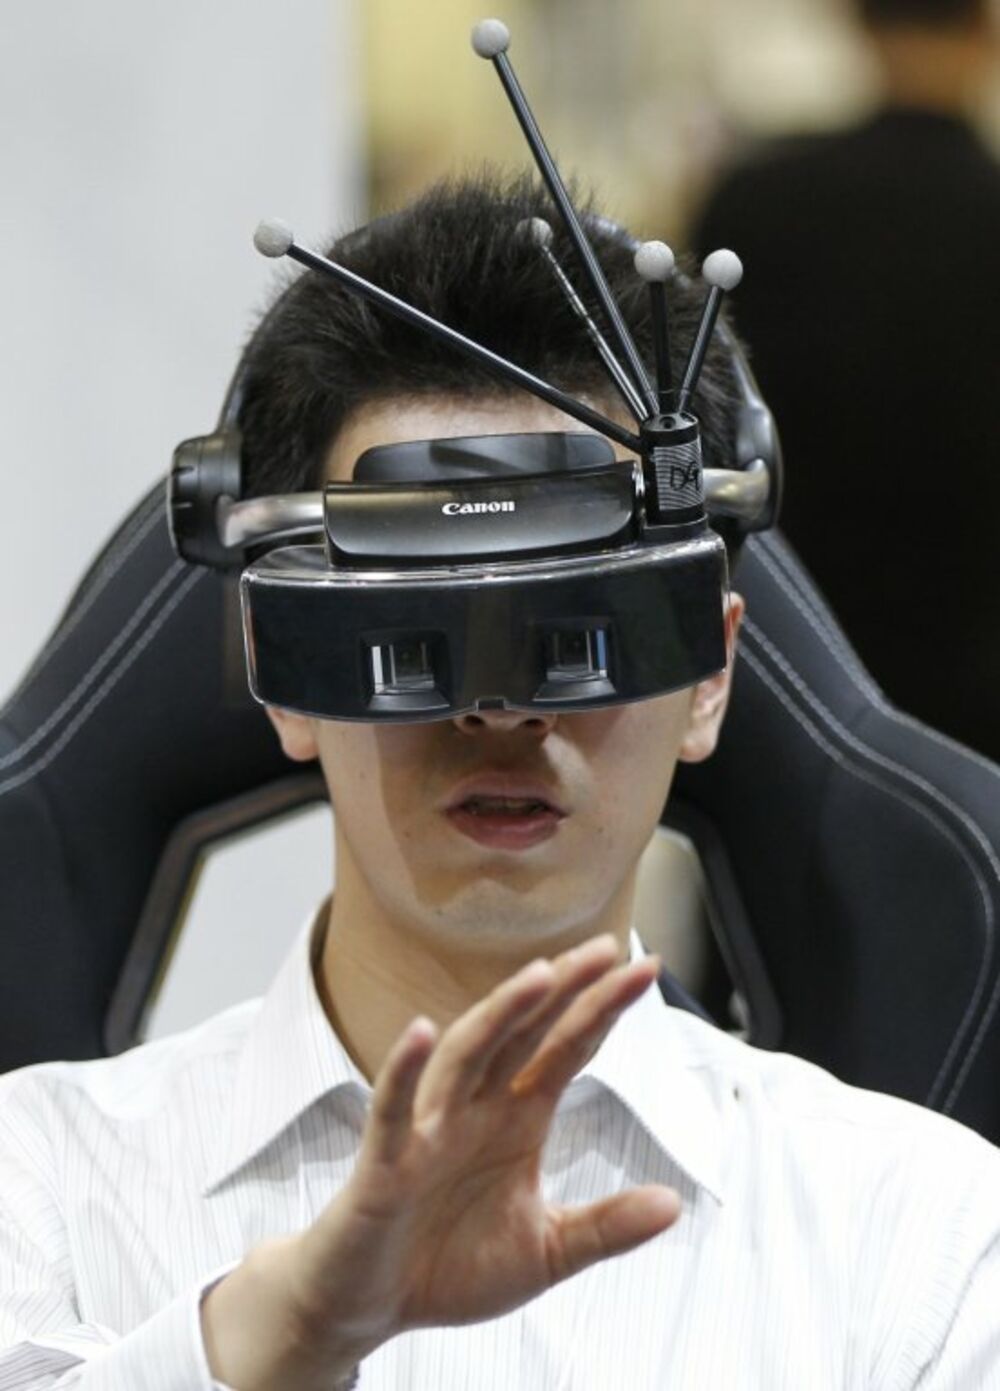 Virtuelna Stvarnost